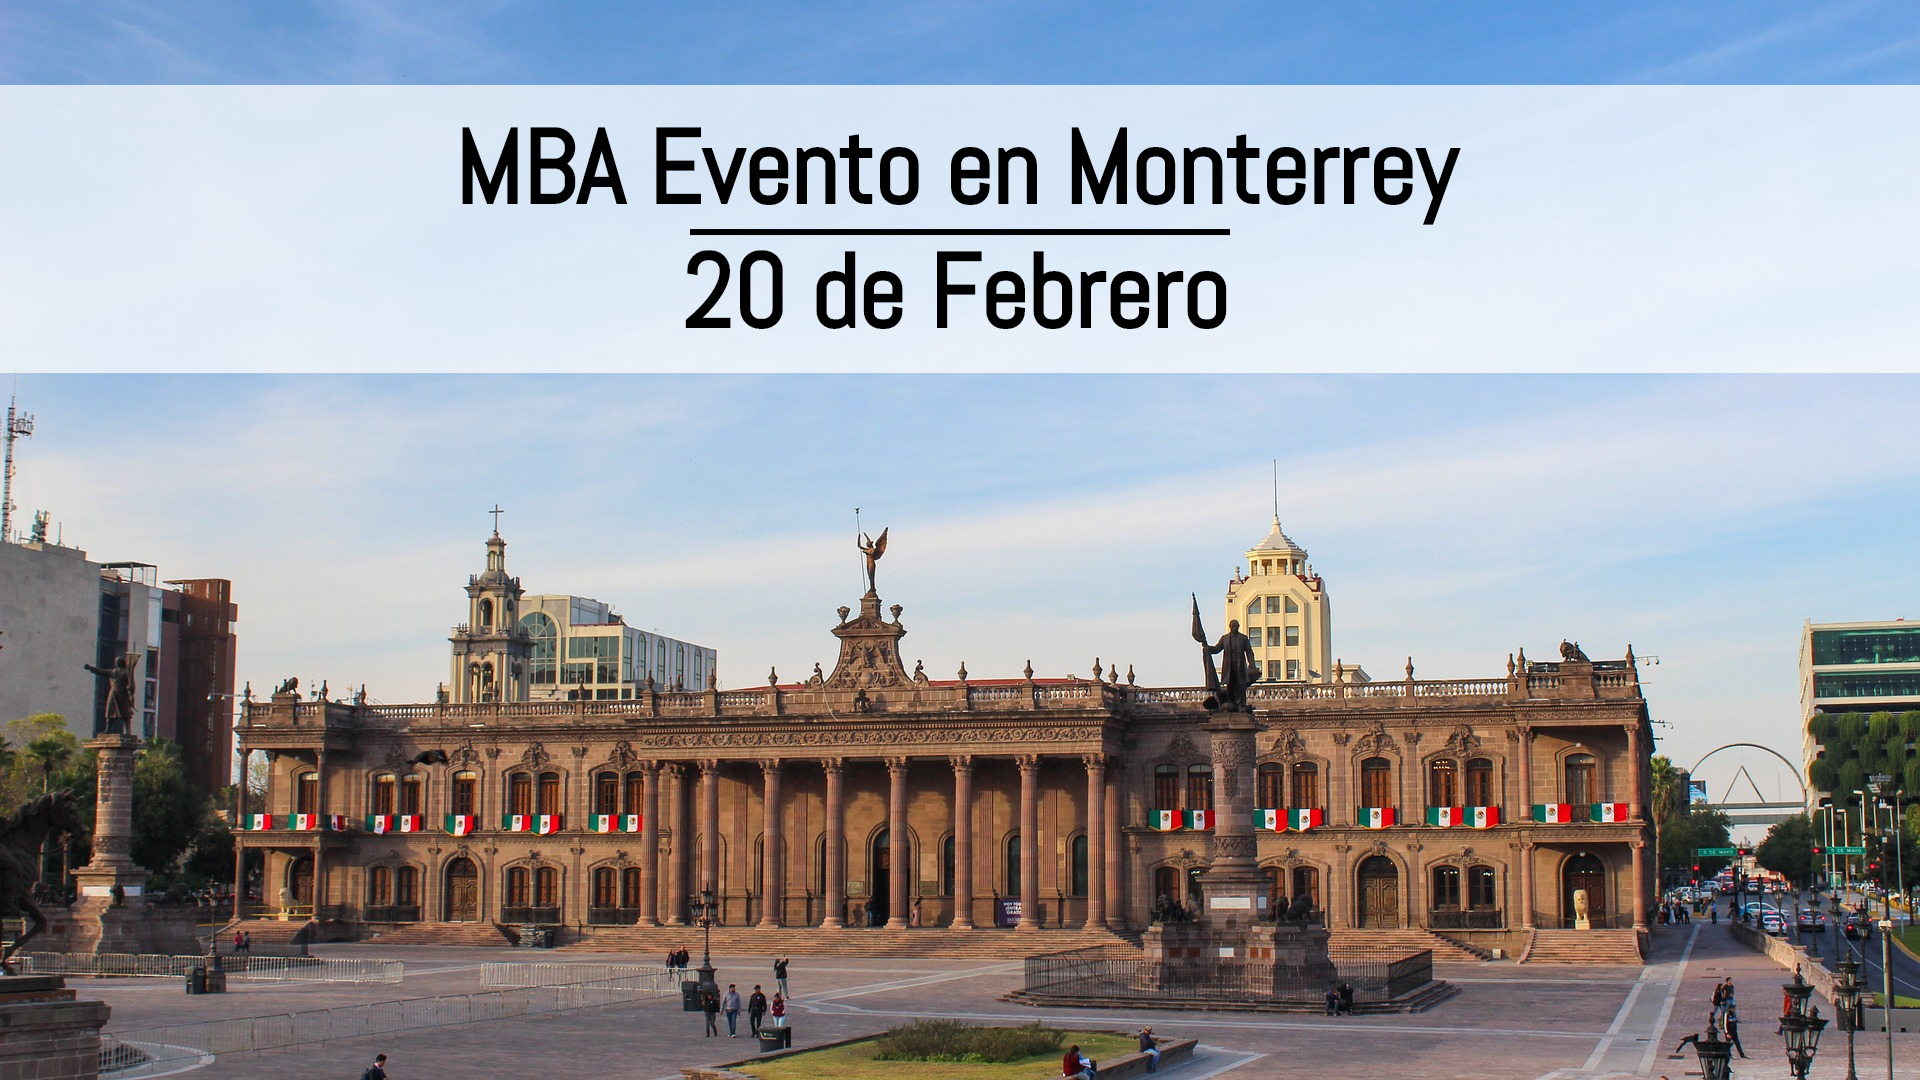 Access MBA in Monterrey!, Monterrey, Nuevo Leon, Mexico